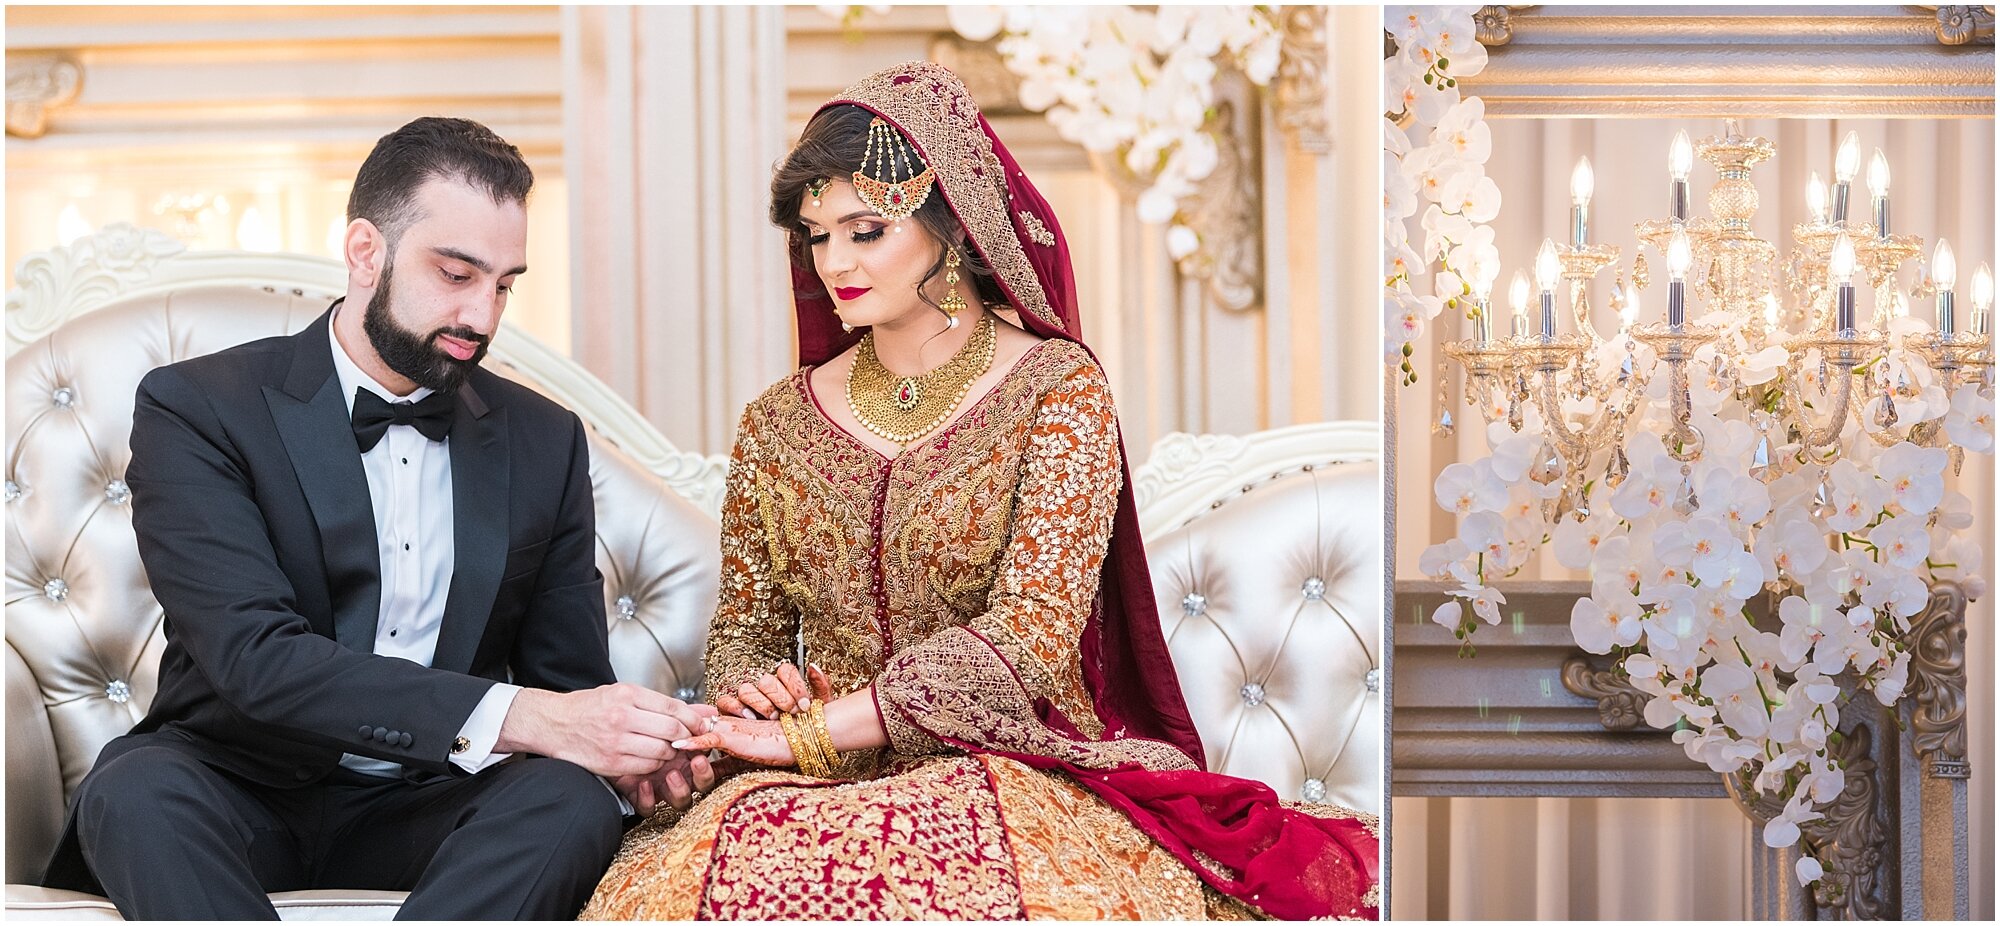 naaima and kaleem louisville pakistani wedding photographer destination wedding photographer maha studios_0012.jpg